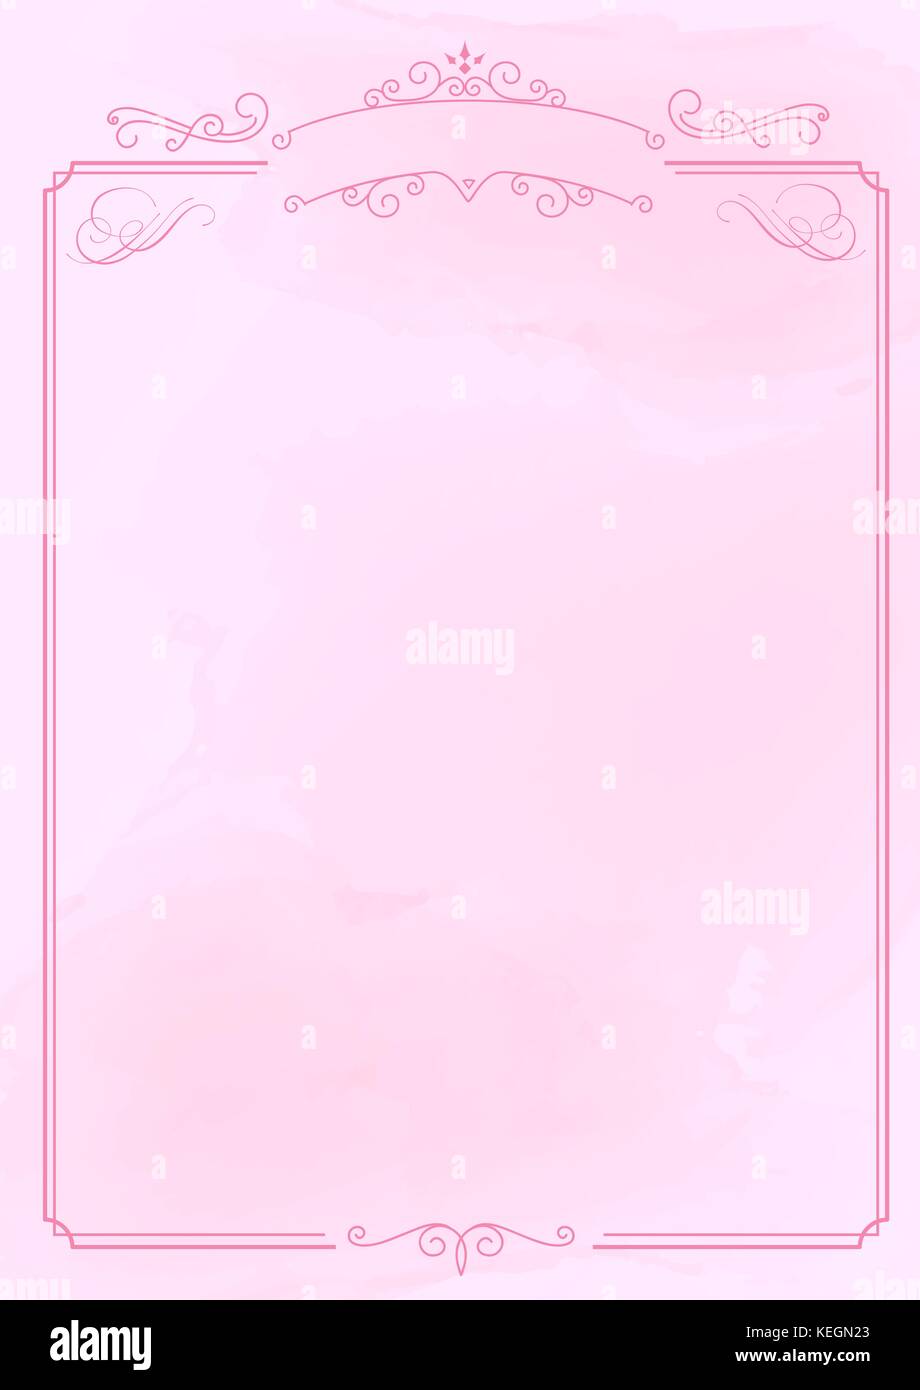 Format A4 Vertikale cafe Menü - Dekorative retro Grenze und rosa Tinte Bürste Papier Hintergrund Stock Vektor